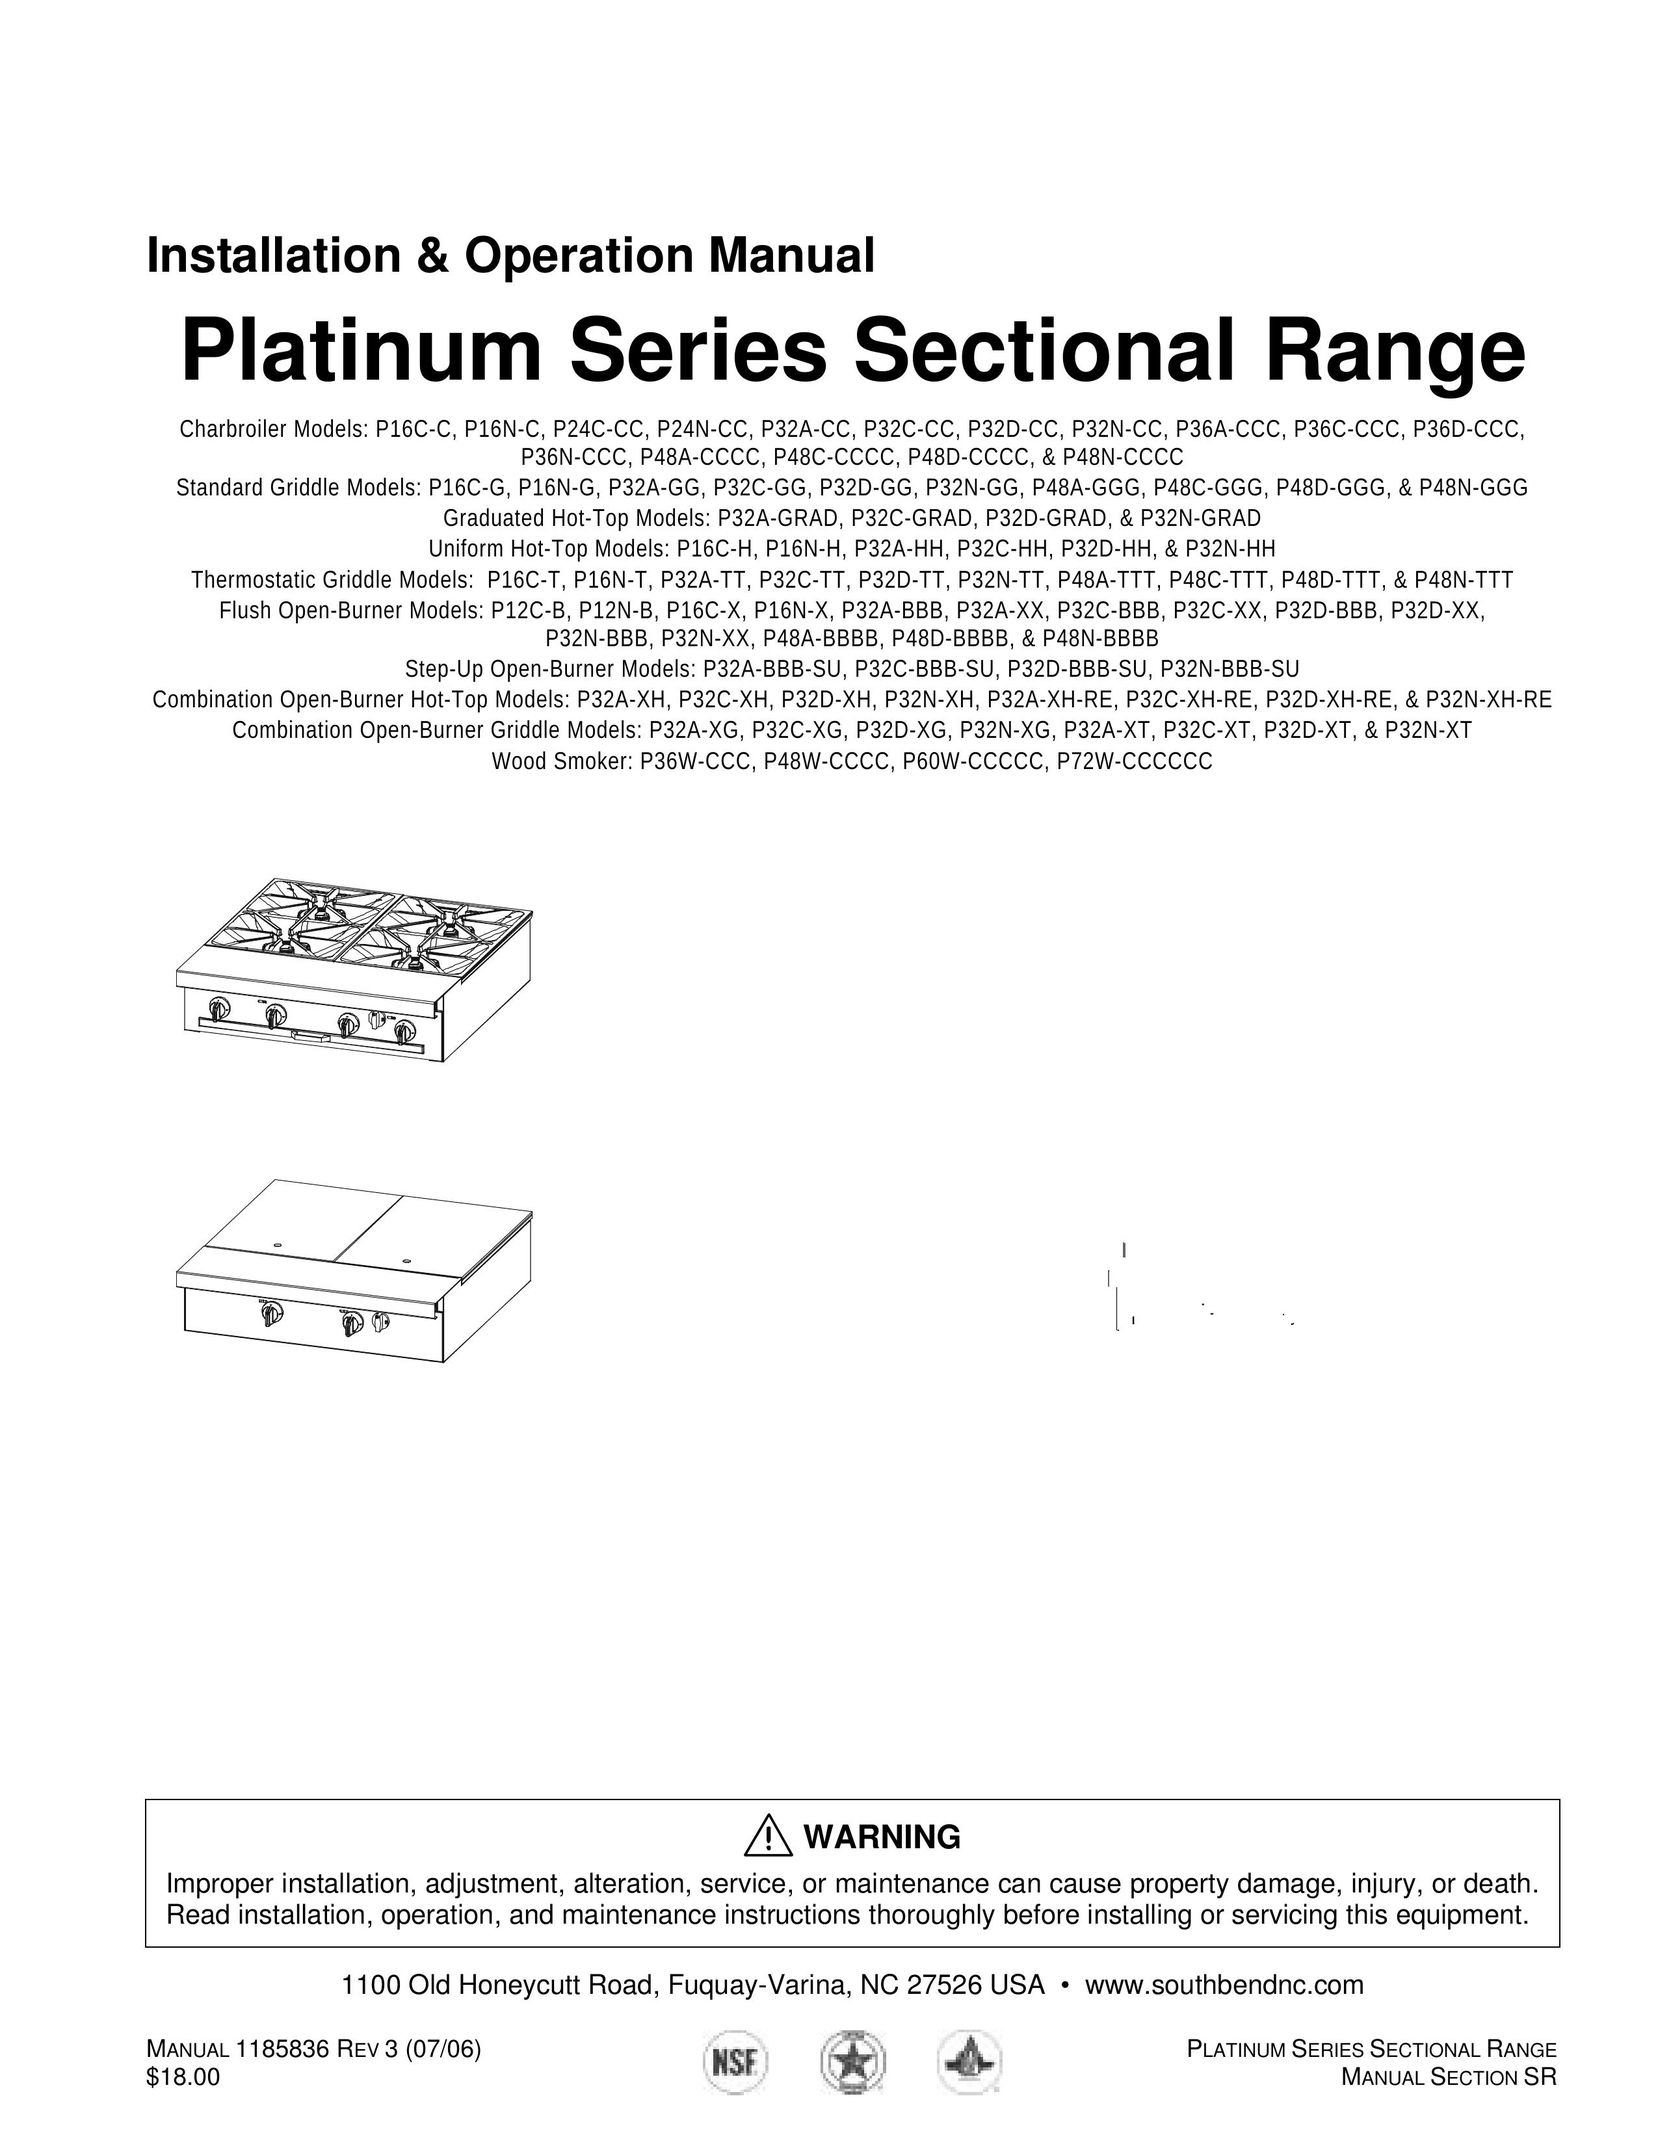 Southbend P16C-X Range User Manual